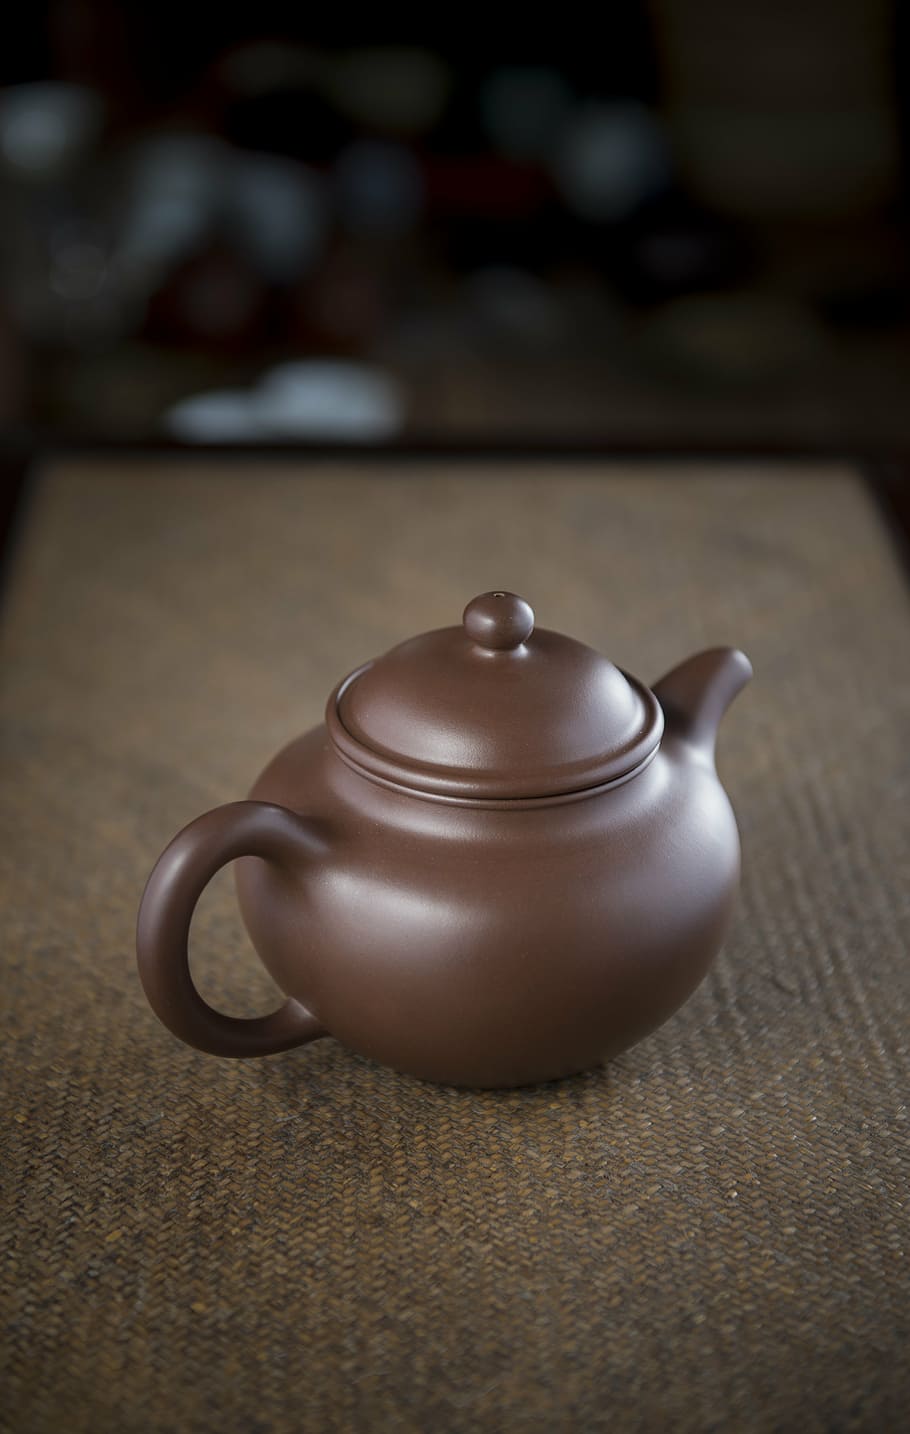 chá, antiguidade, roxo, bule de chá, chá - bebida quente, culturas, bule, mesa, dentro de casa, foco em primeiro plano